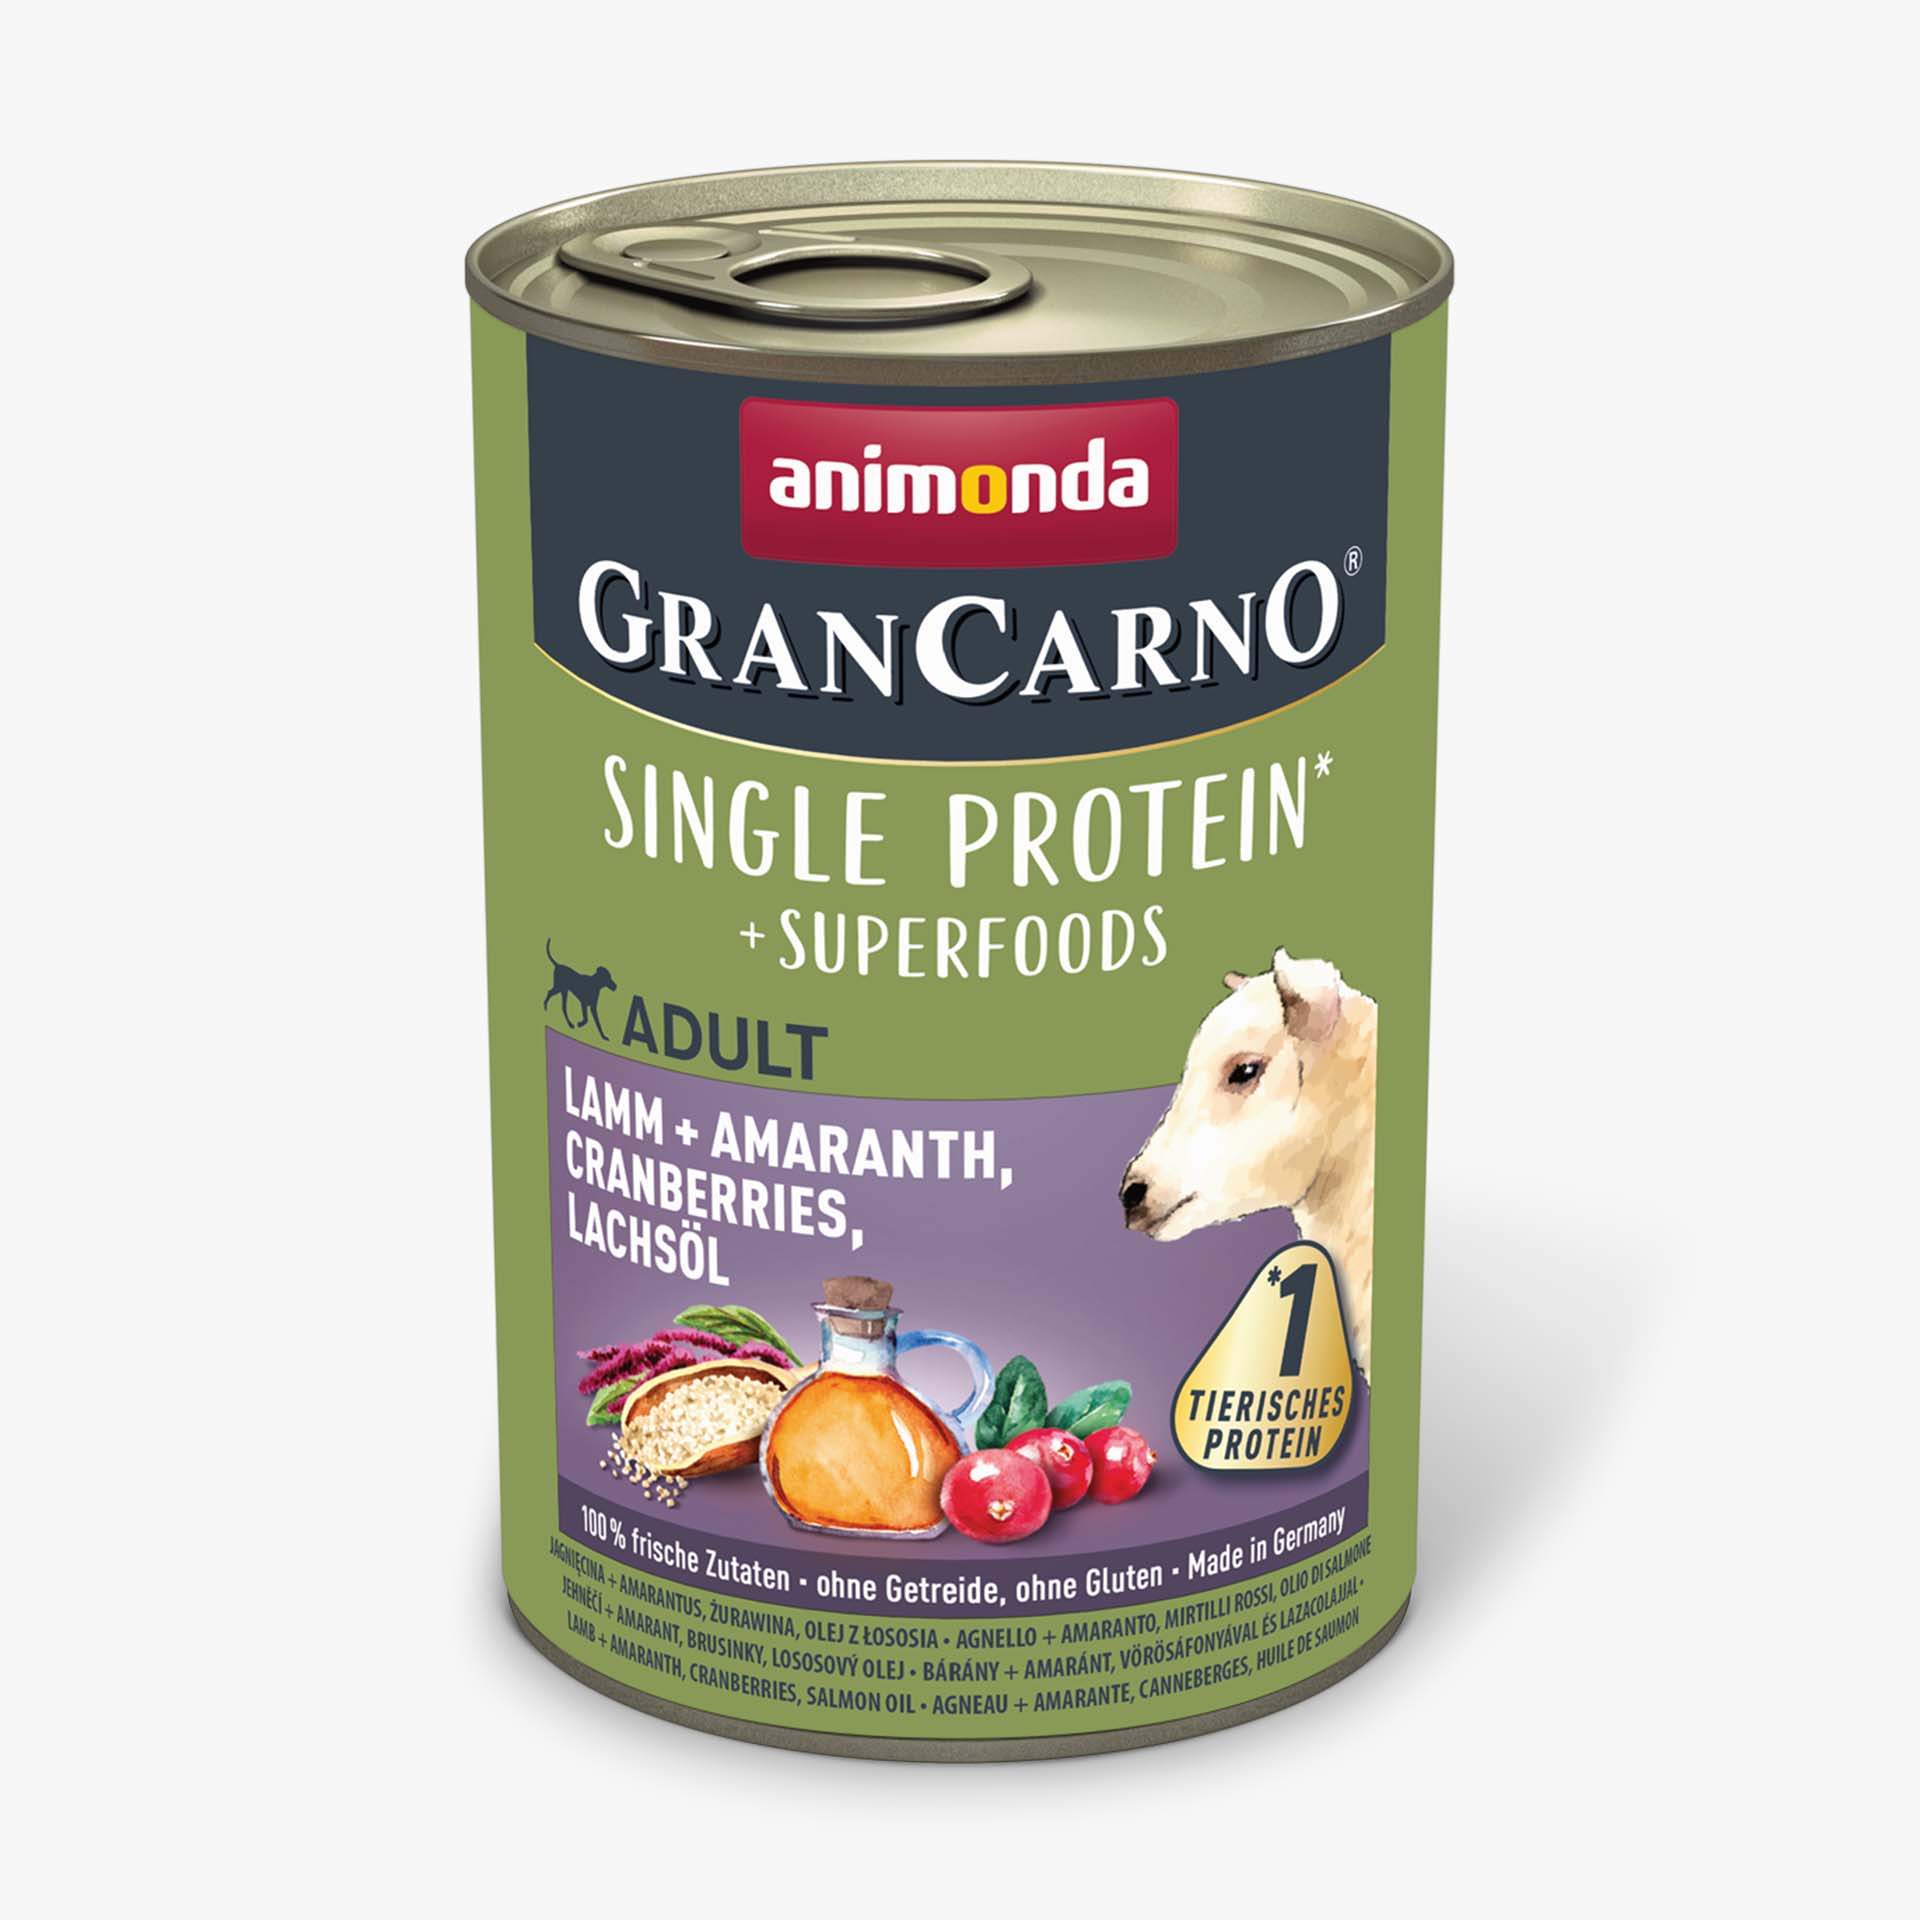 GranCarno lamb + amaranthus, cranberries, salmon oil Superfoods